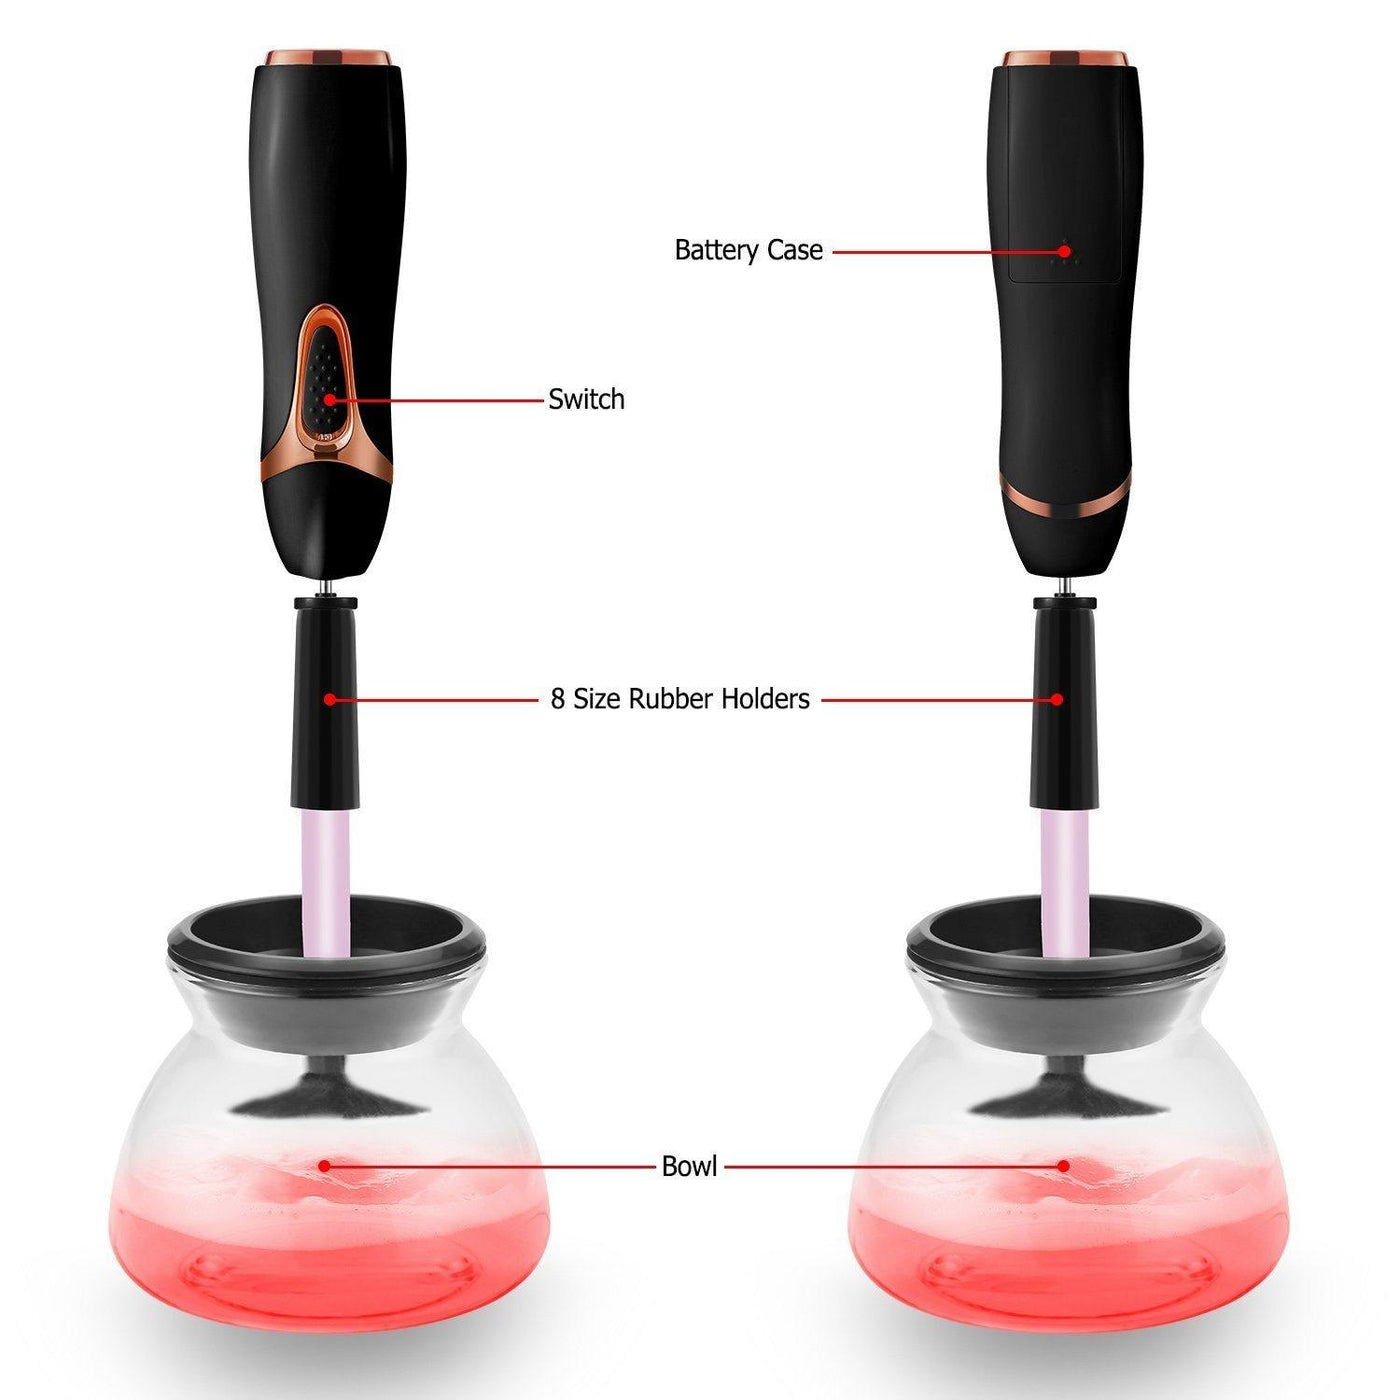 USB Fast Dry Makeup Brush Cleaner Machine Tool - Vianchi Natural Glam